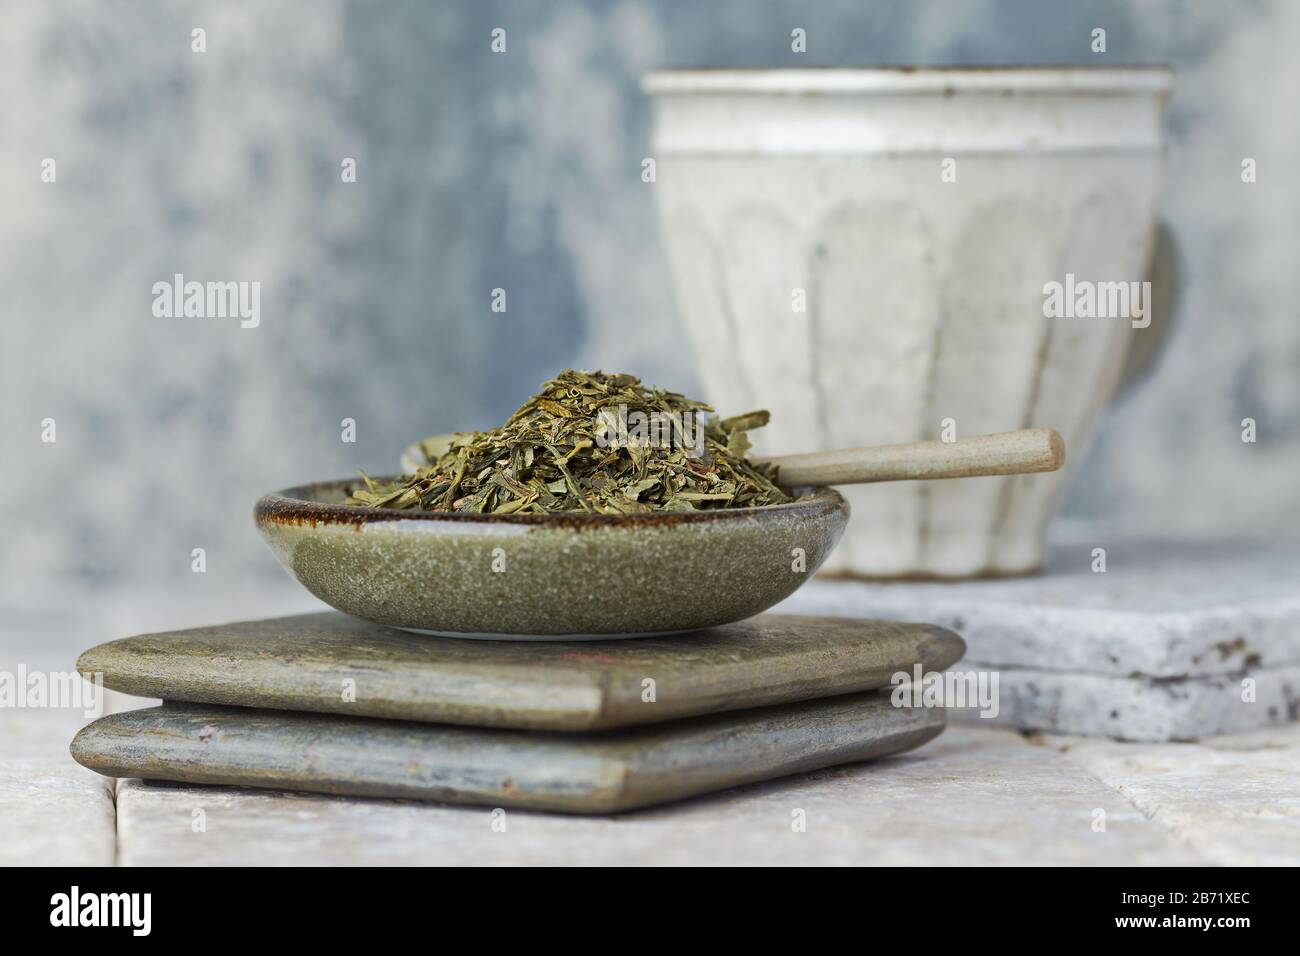 https://c8.alamy.com/comp/2B71XEC/dried-green-tea-leaves-on-bright-background-2B71XEC.jpg